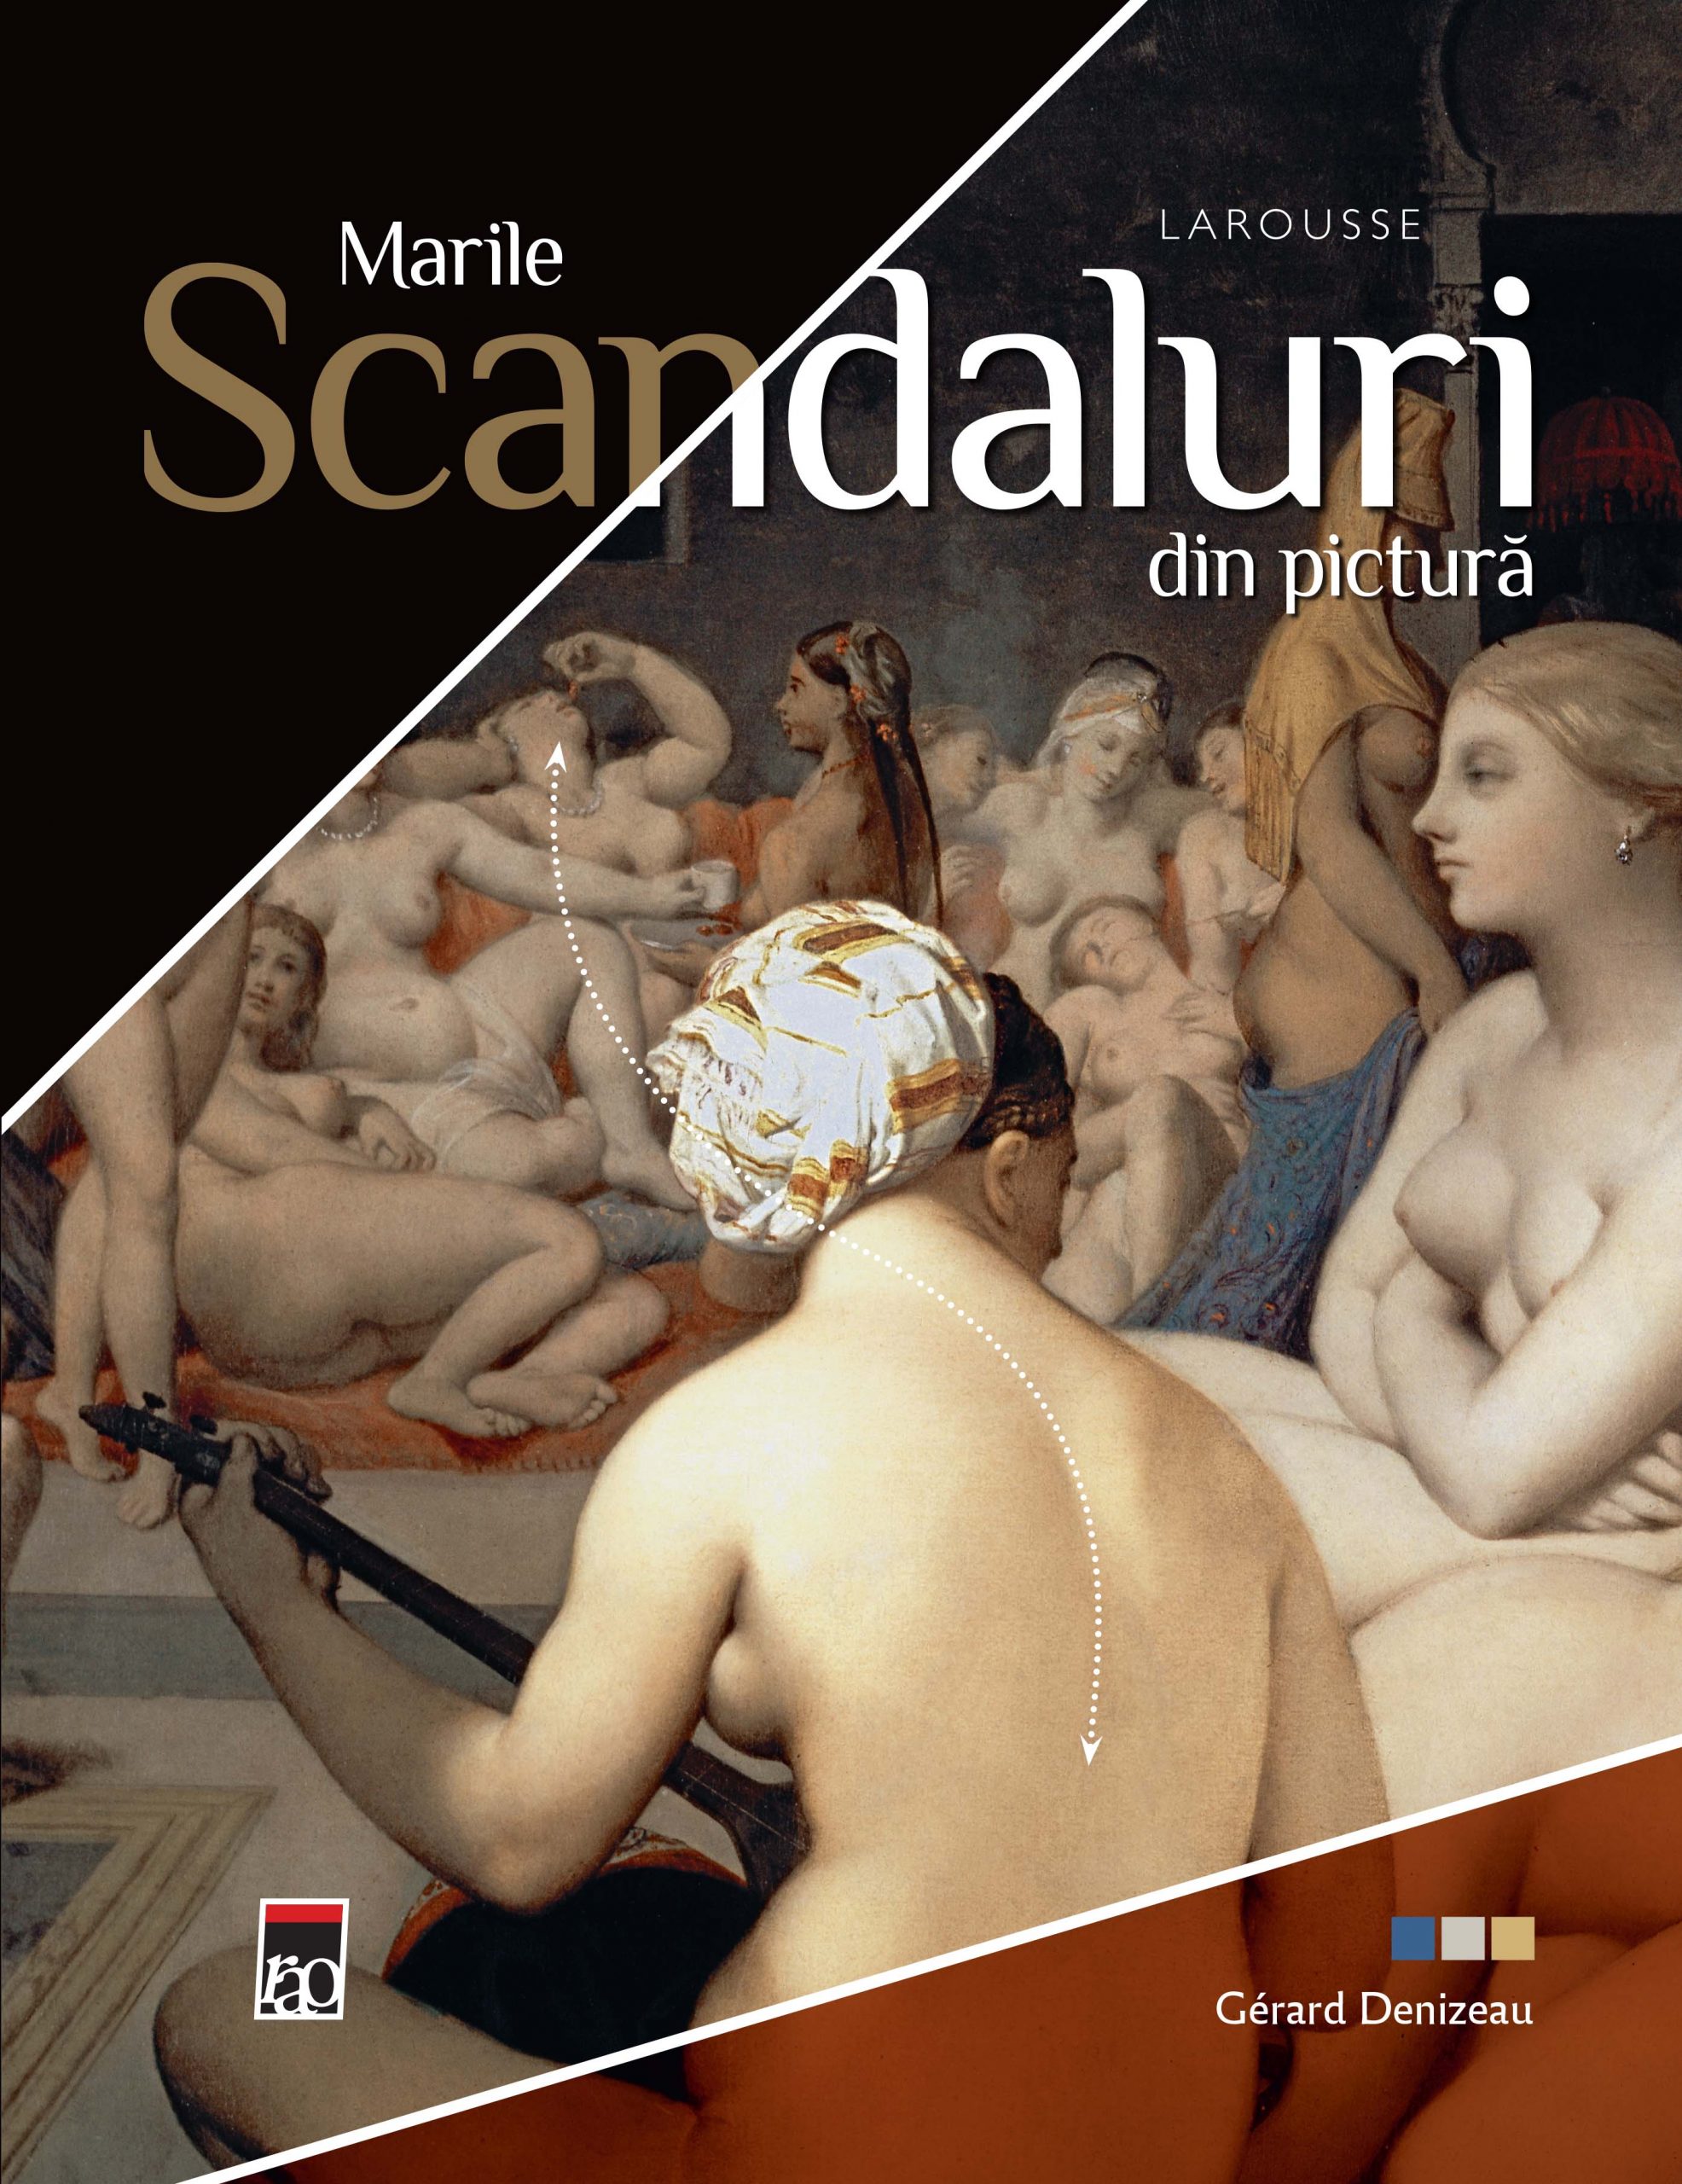 Marile scandaluri din pictura | Gerard Denizeau carturesti.ro poza bestsellers.ro